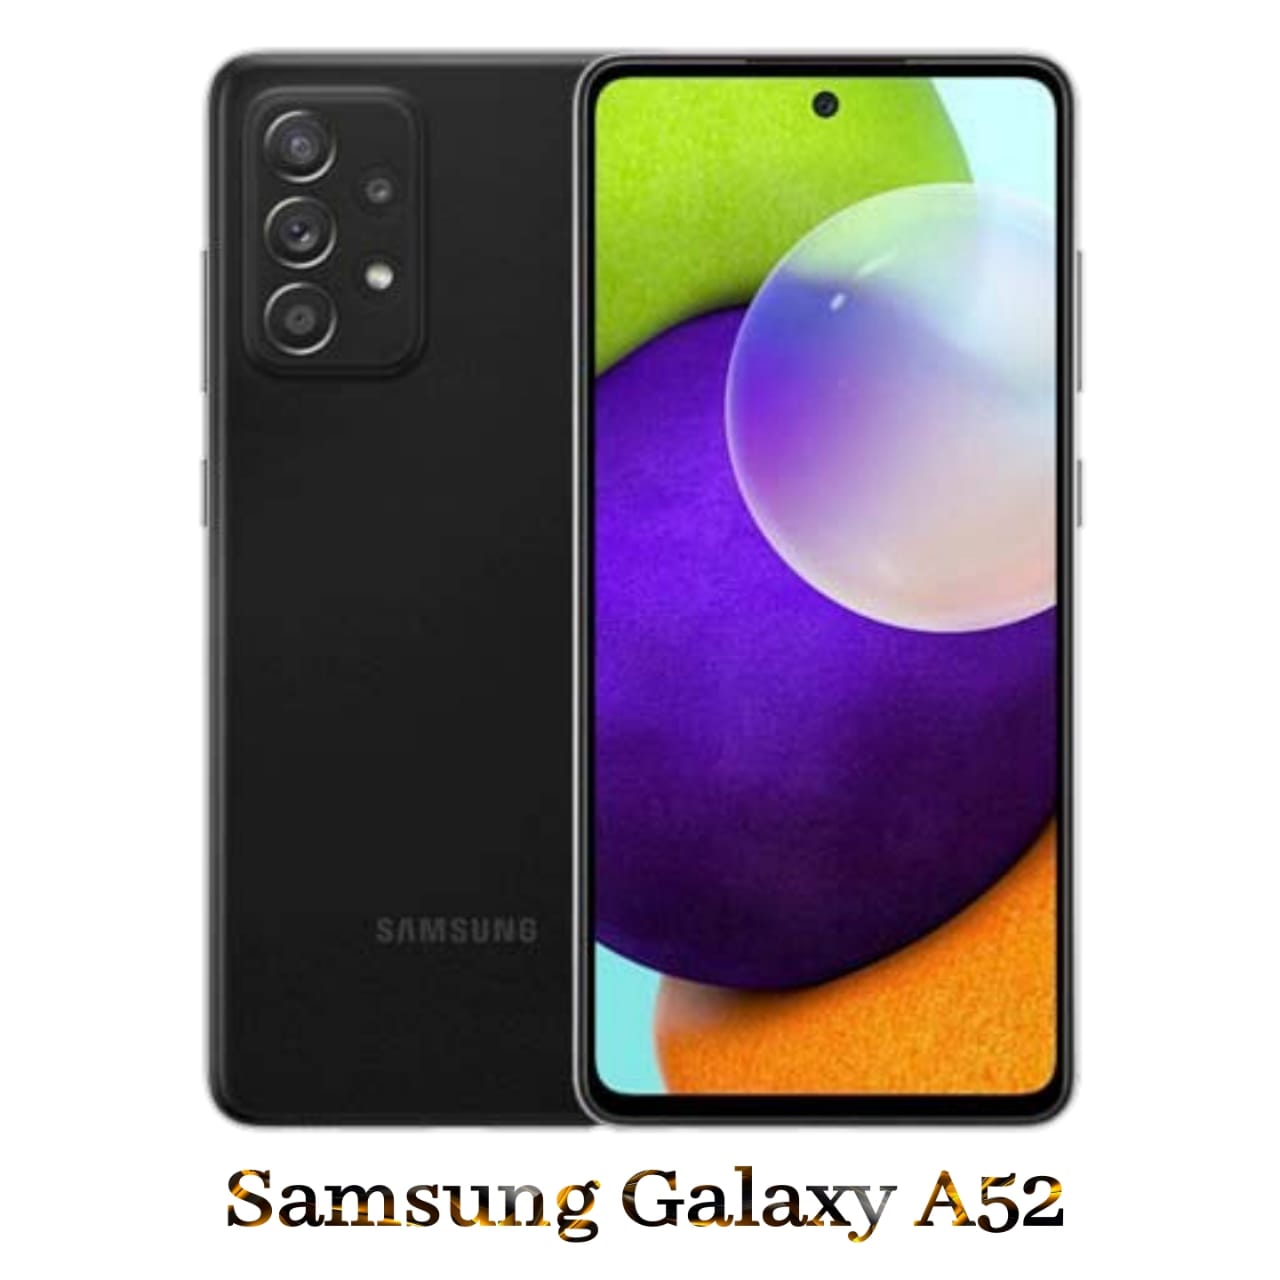 Samsung Galaxy A52 Price in Bangladesh 2022 - Best Samsung Galaxy Mobile